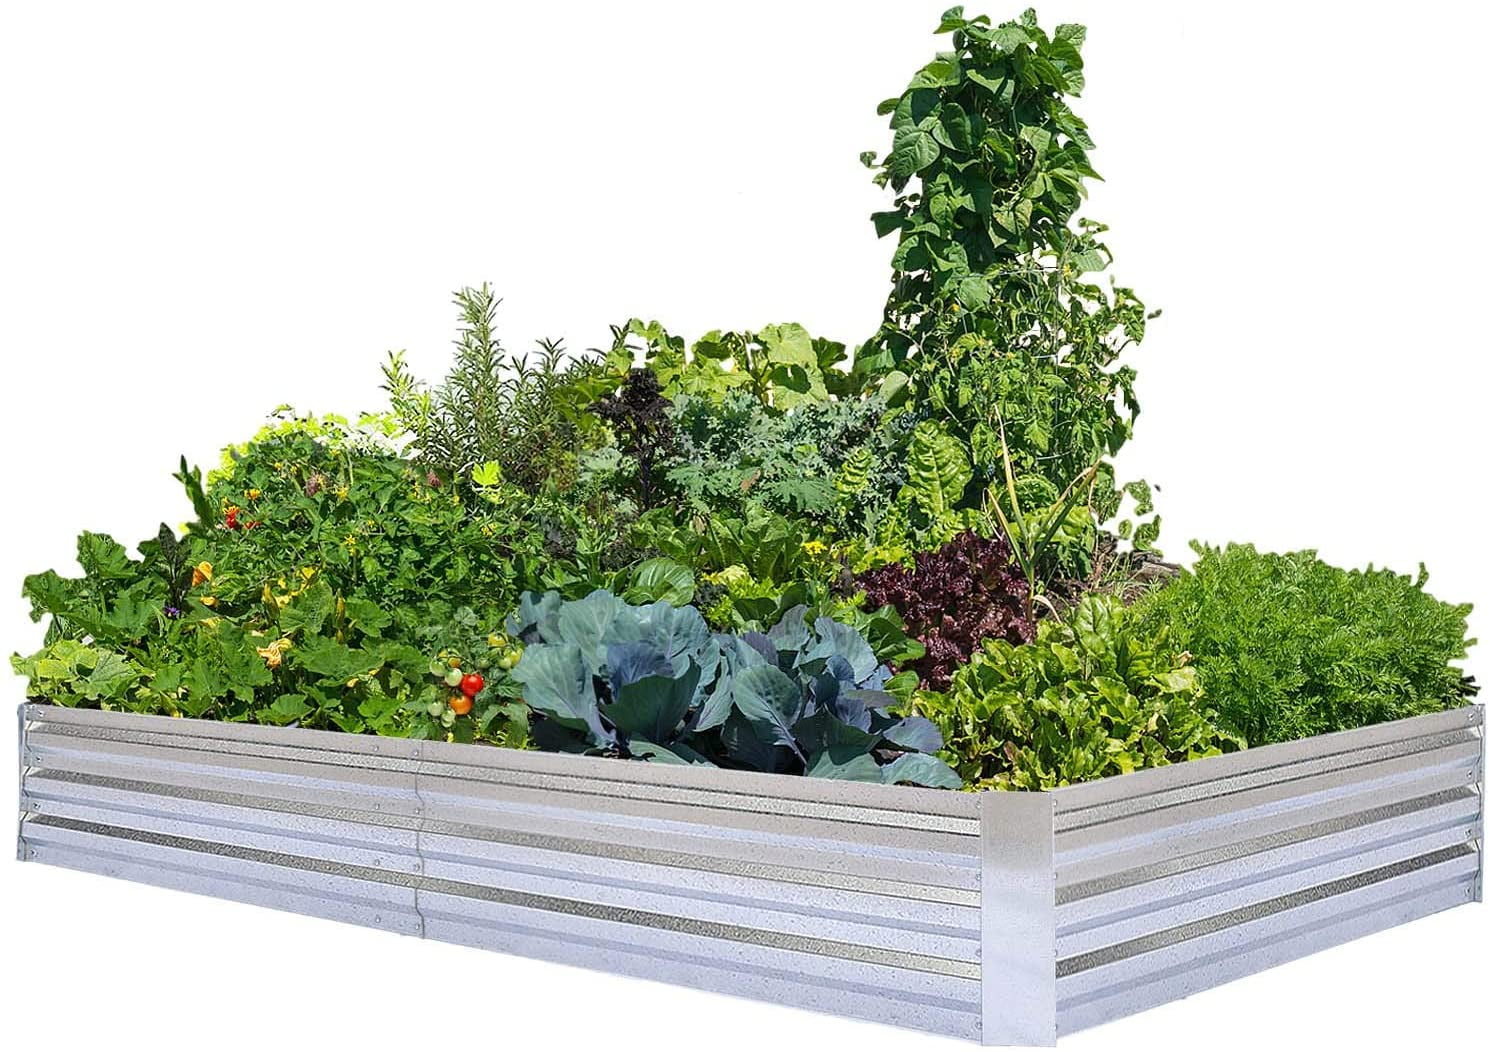 Metal Raised Garden Beds for Vegetables Outdoor Planter Box Galvanized Steel Gardening Flower Bed Kits 4x3x1 Ft Wheat 